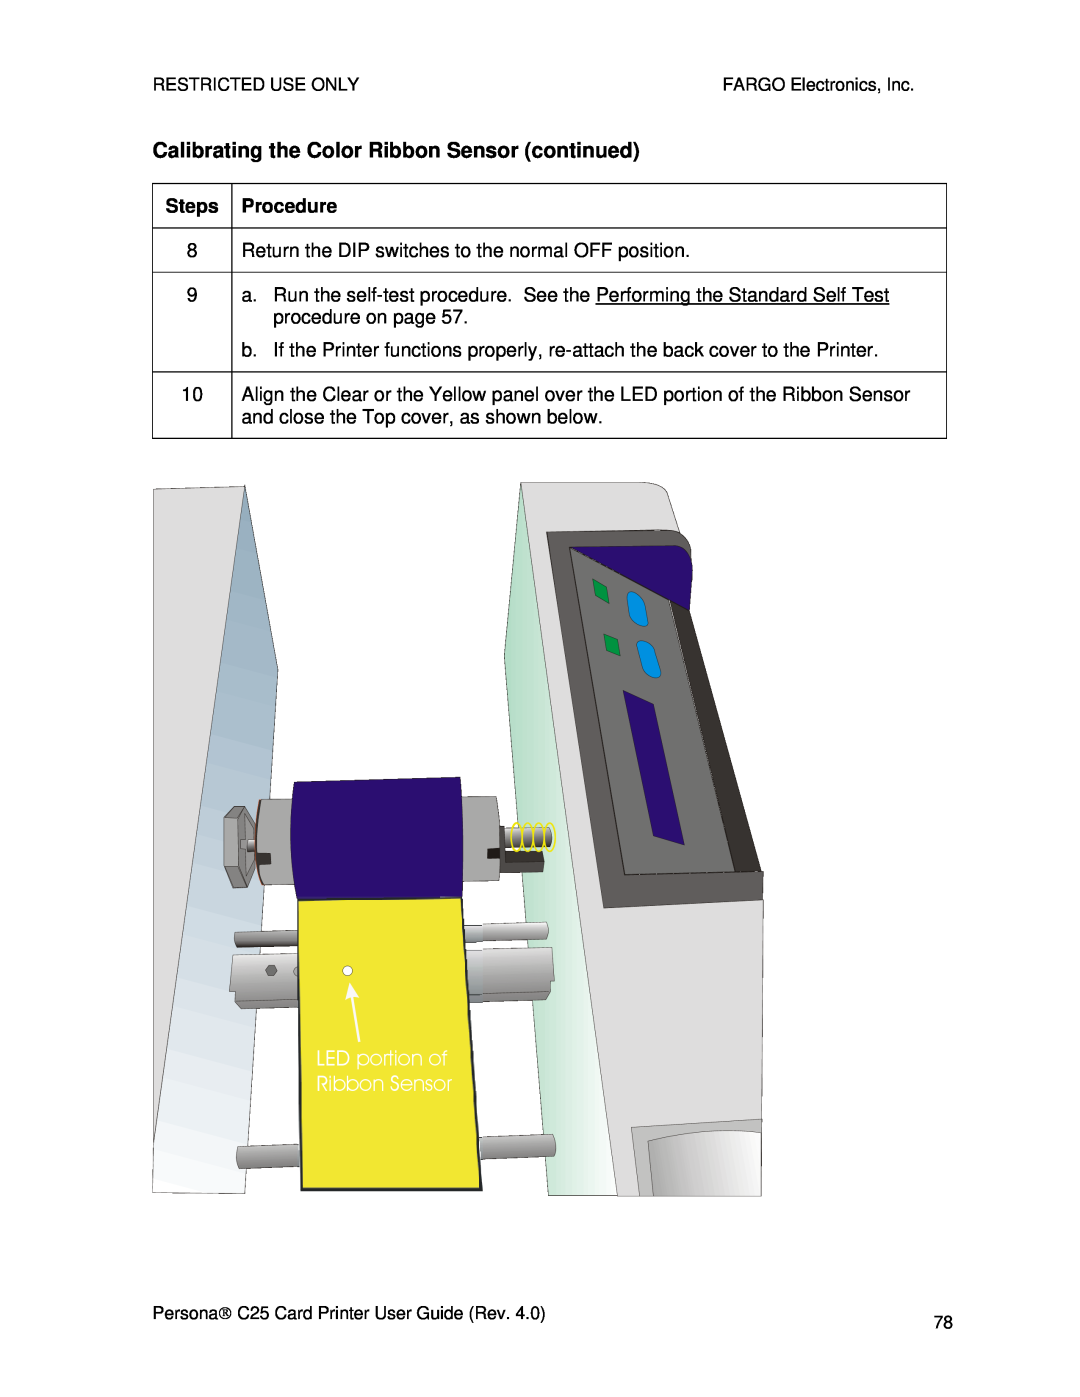 FARGO electronic S000256 manual Calibrating the Color Ribbon Sensor continued, LED portion of Ribbon Sensor 